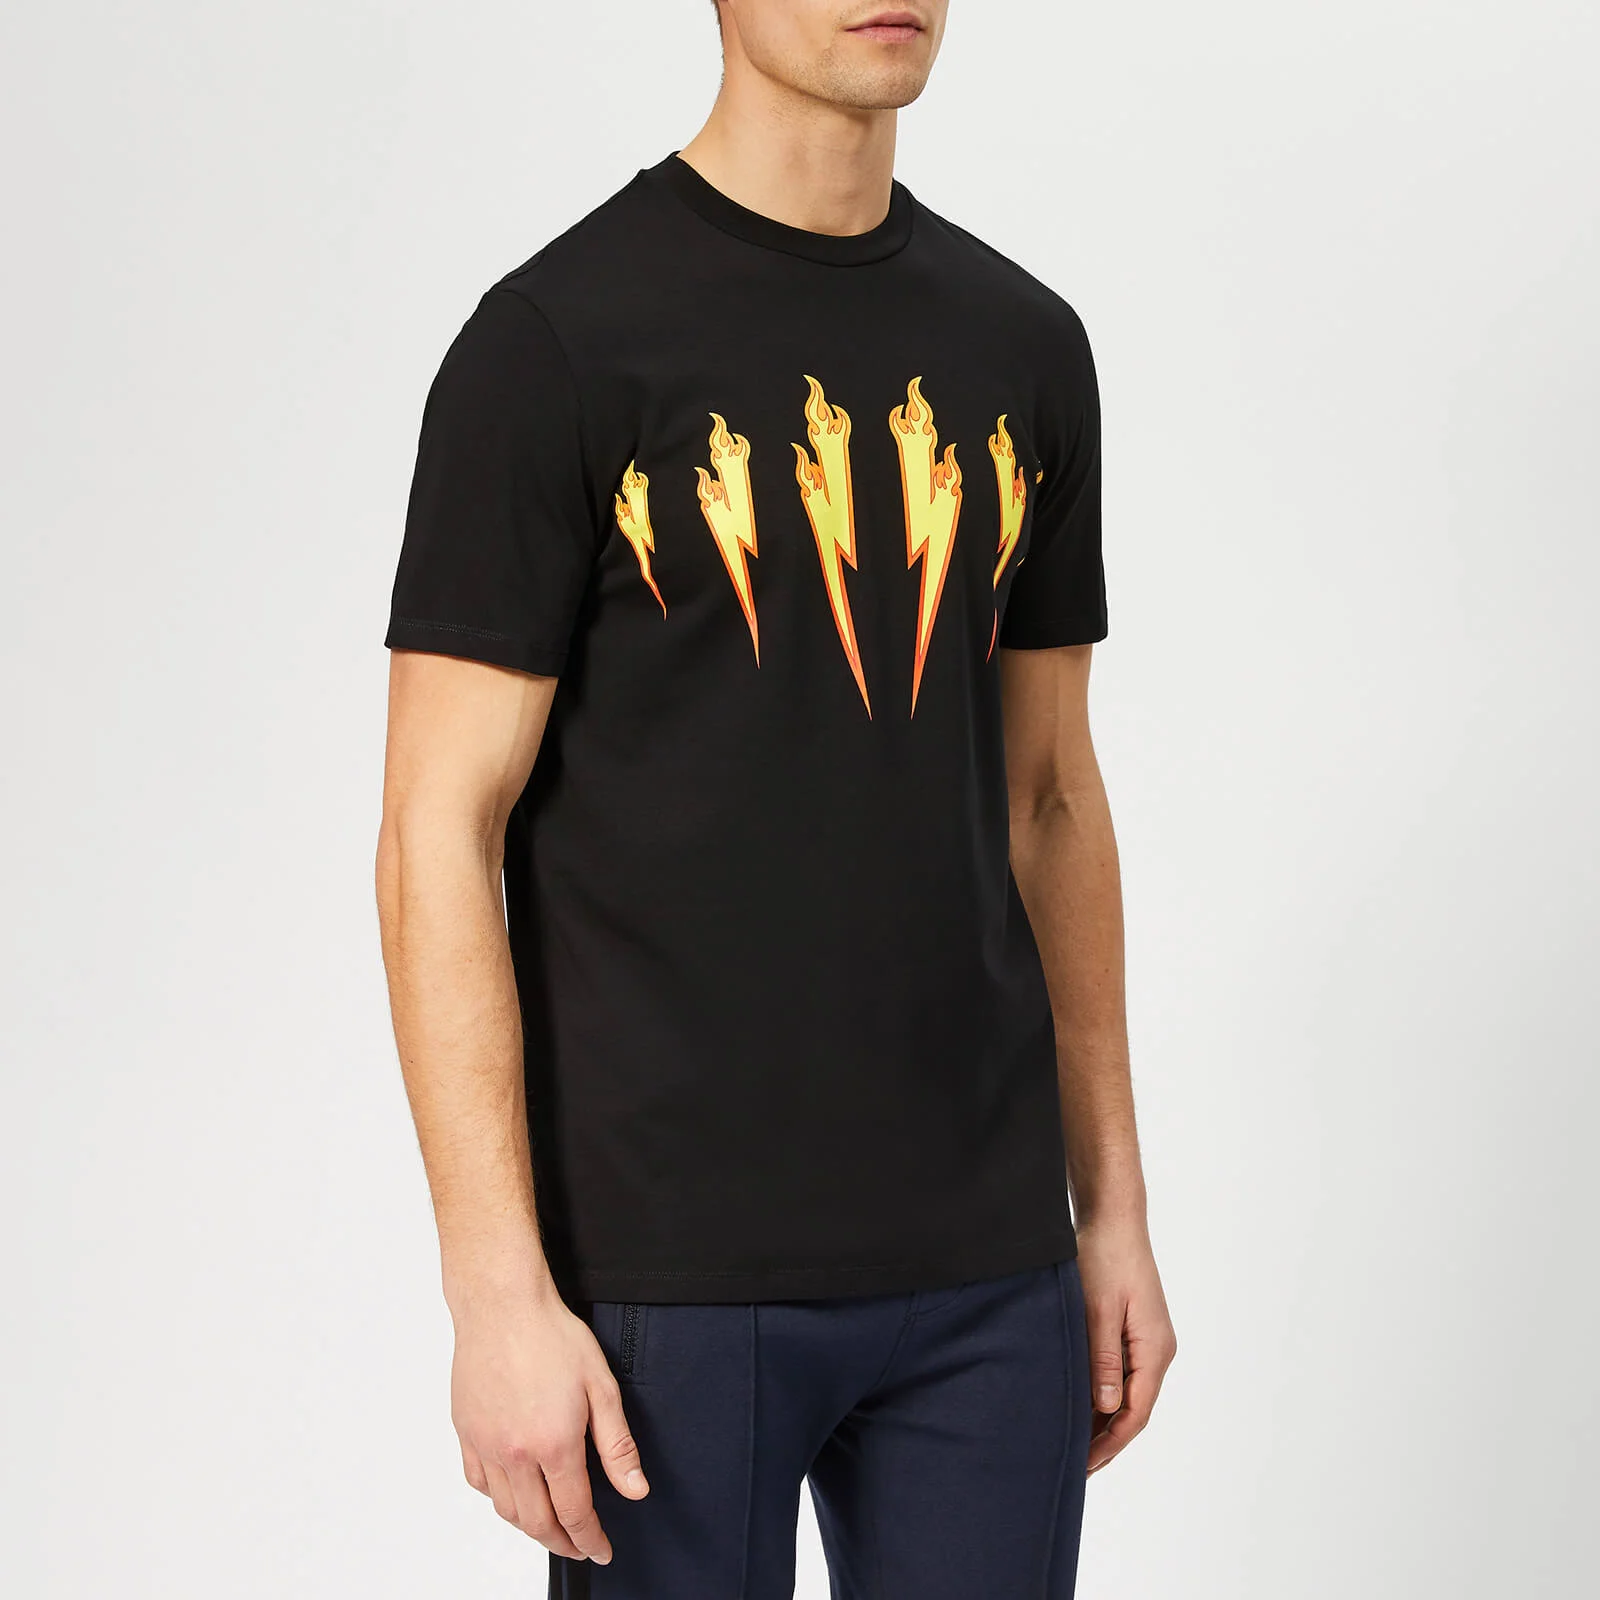 Neil Barrett Men's Bolt Flame T-Shirt - Black/Yellow Image 1